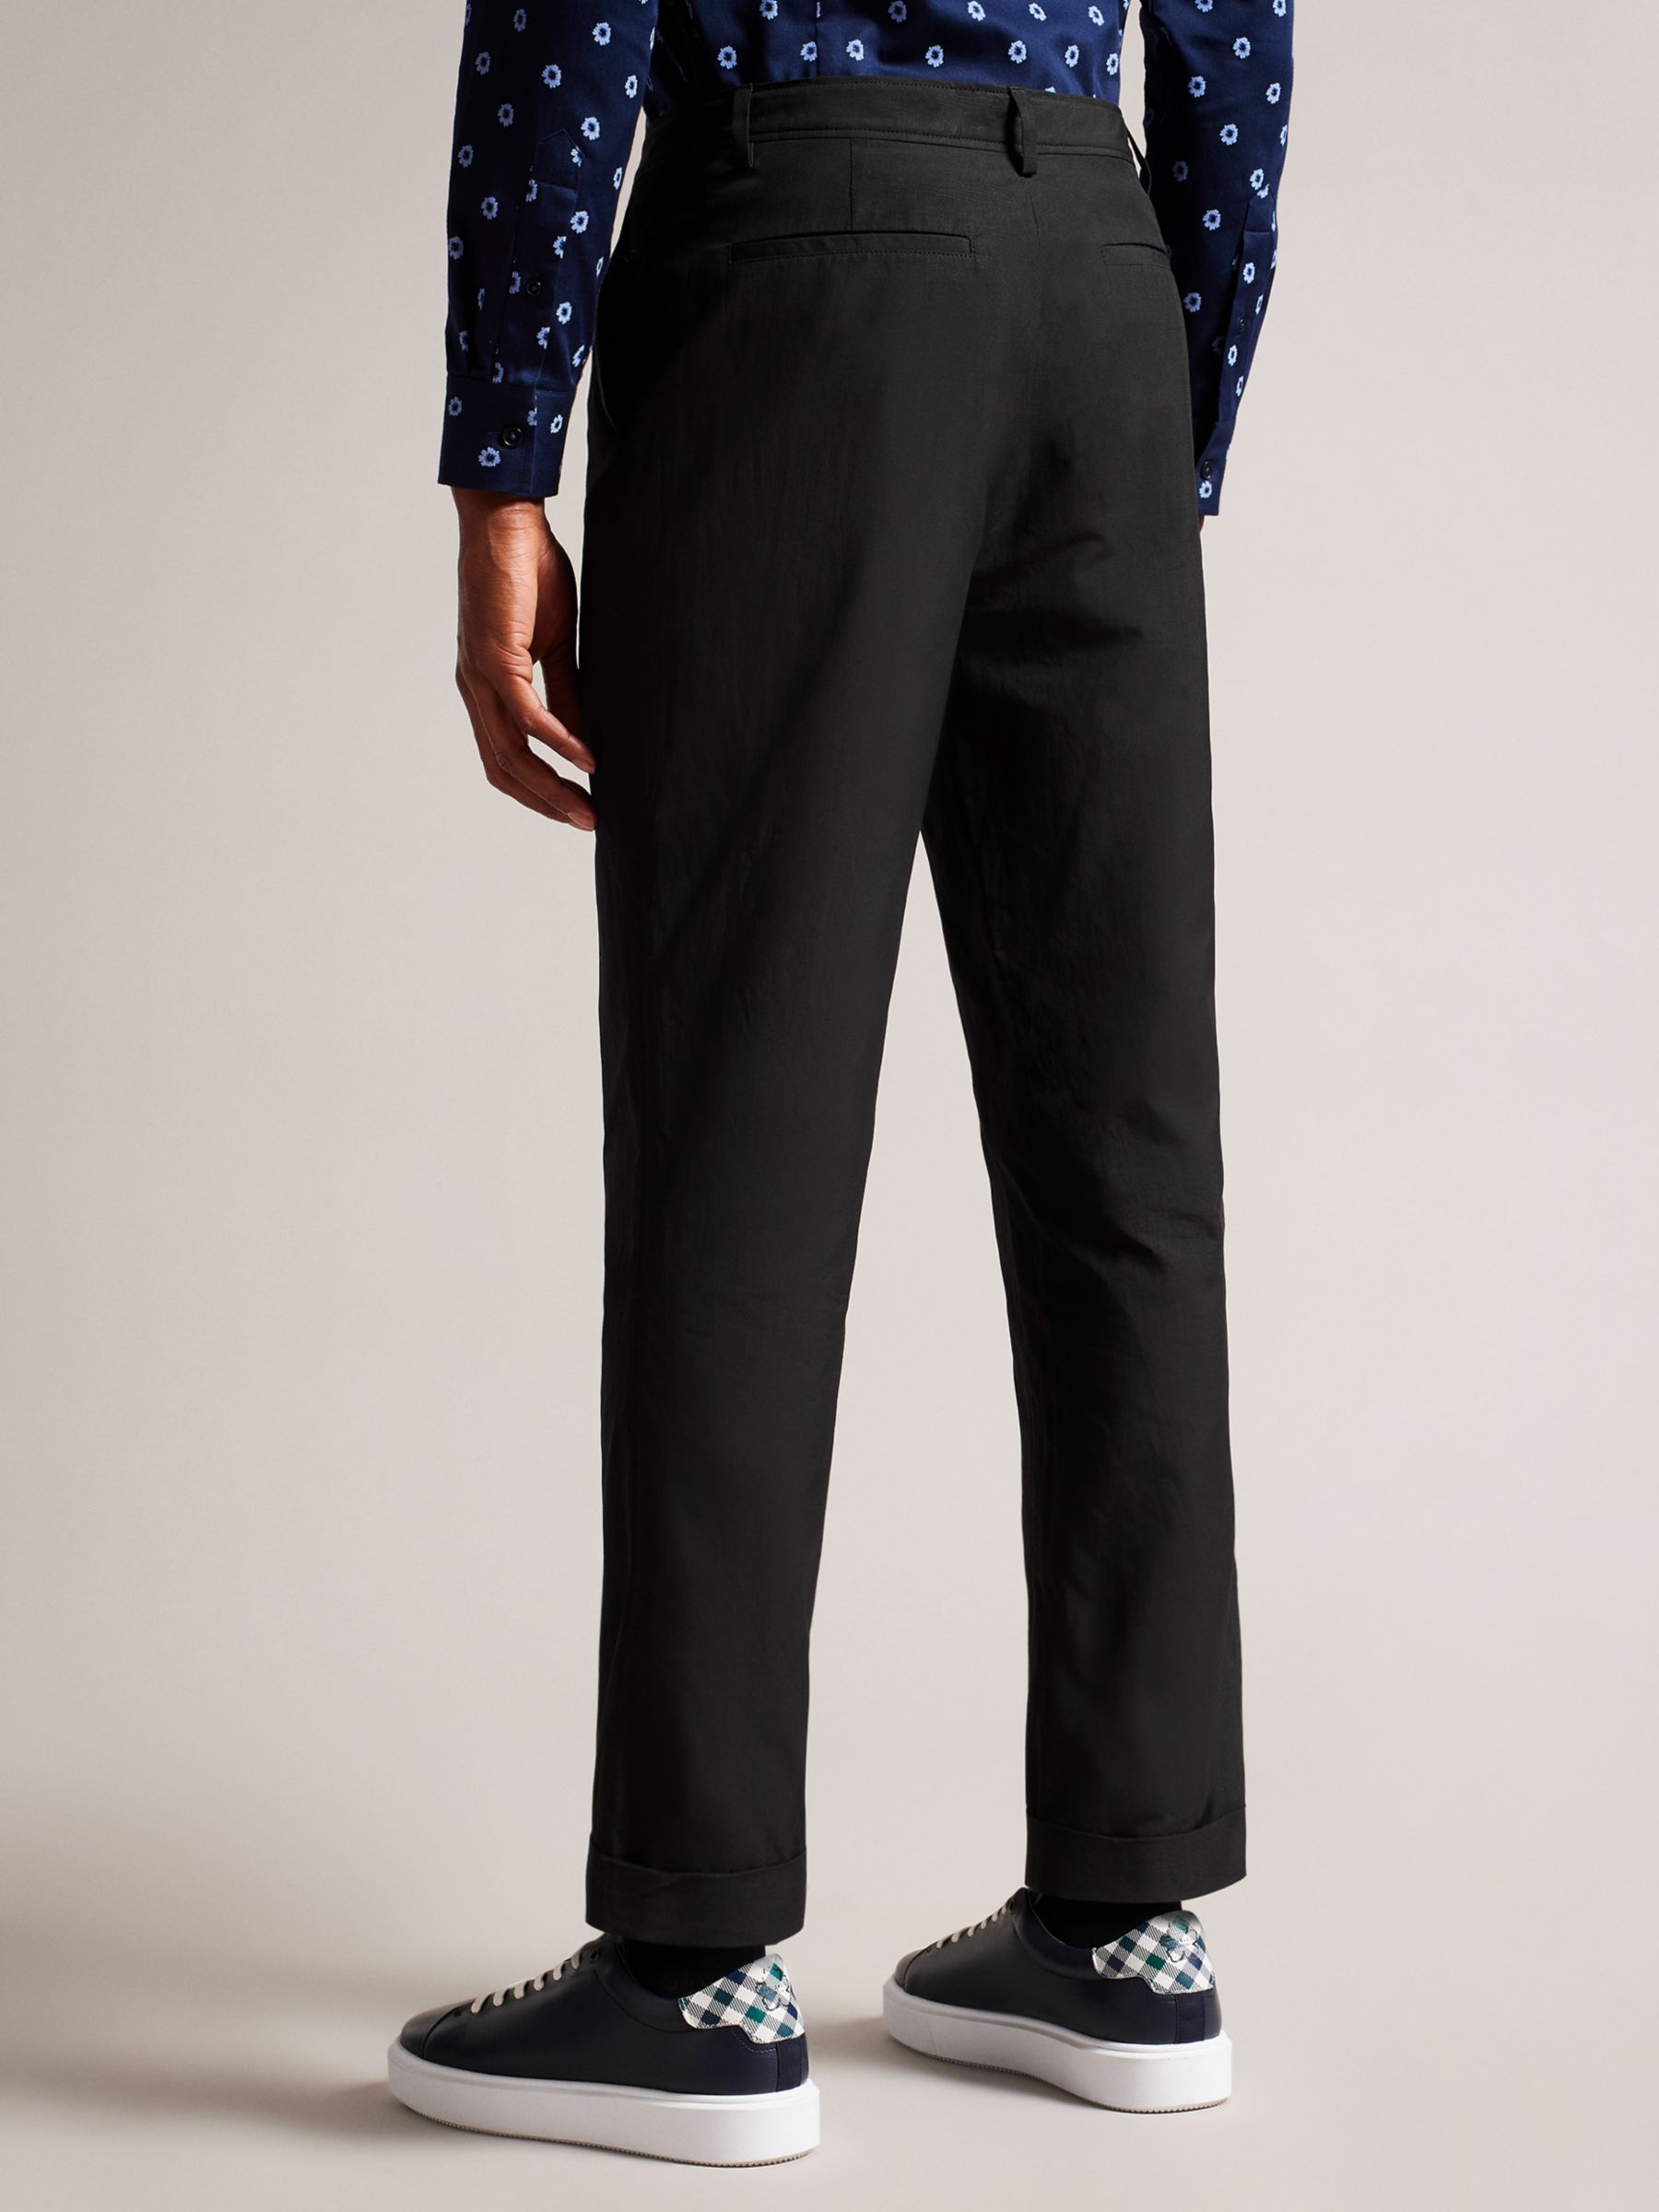 Ted Baker Cleevet Slim Fit Cotton Linen Blend Trousers, Black, 38R